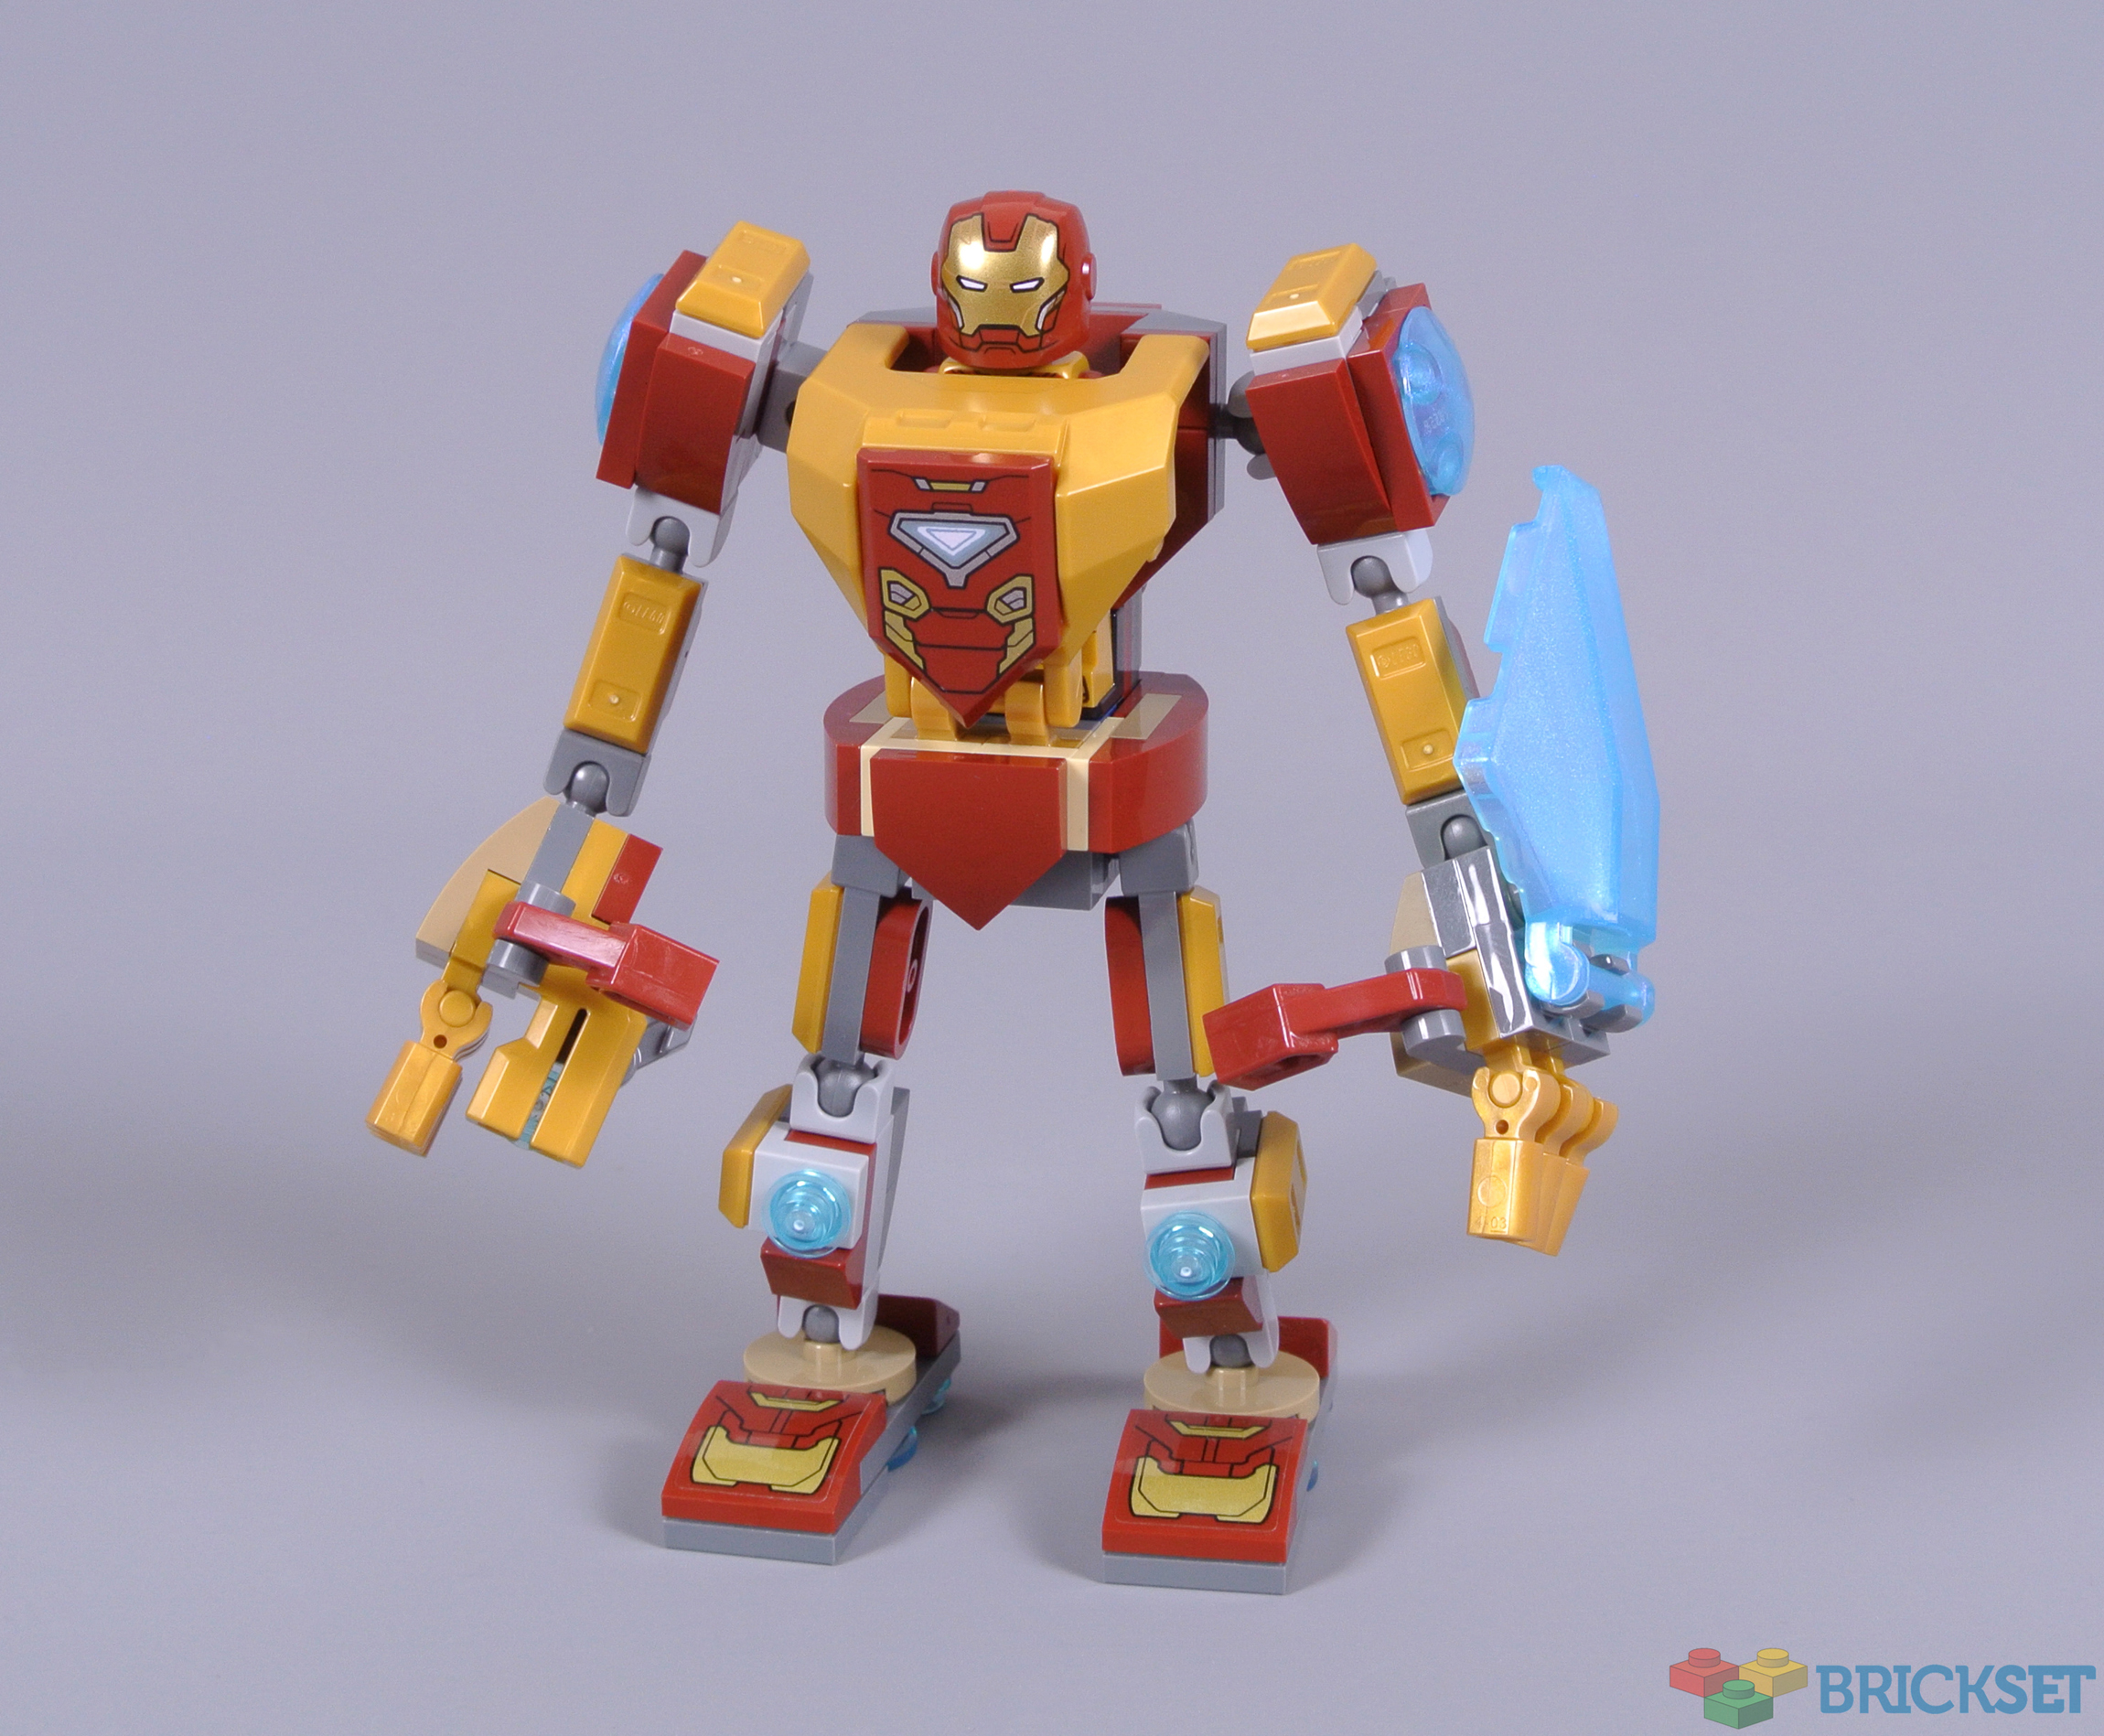 LEGO Marvel 76203 Iron Man Mech Armor - LEGO Speed Build Review